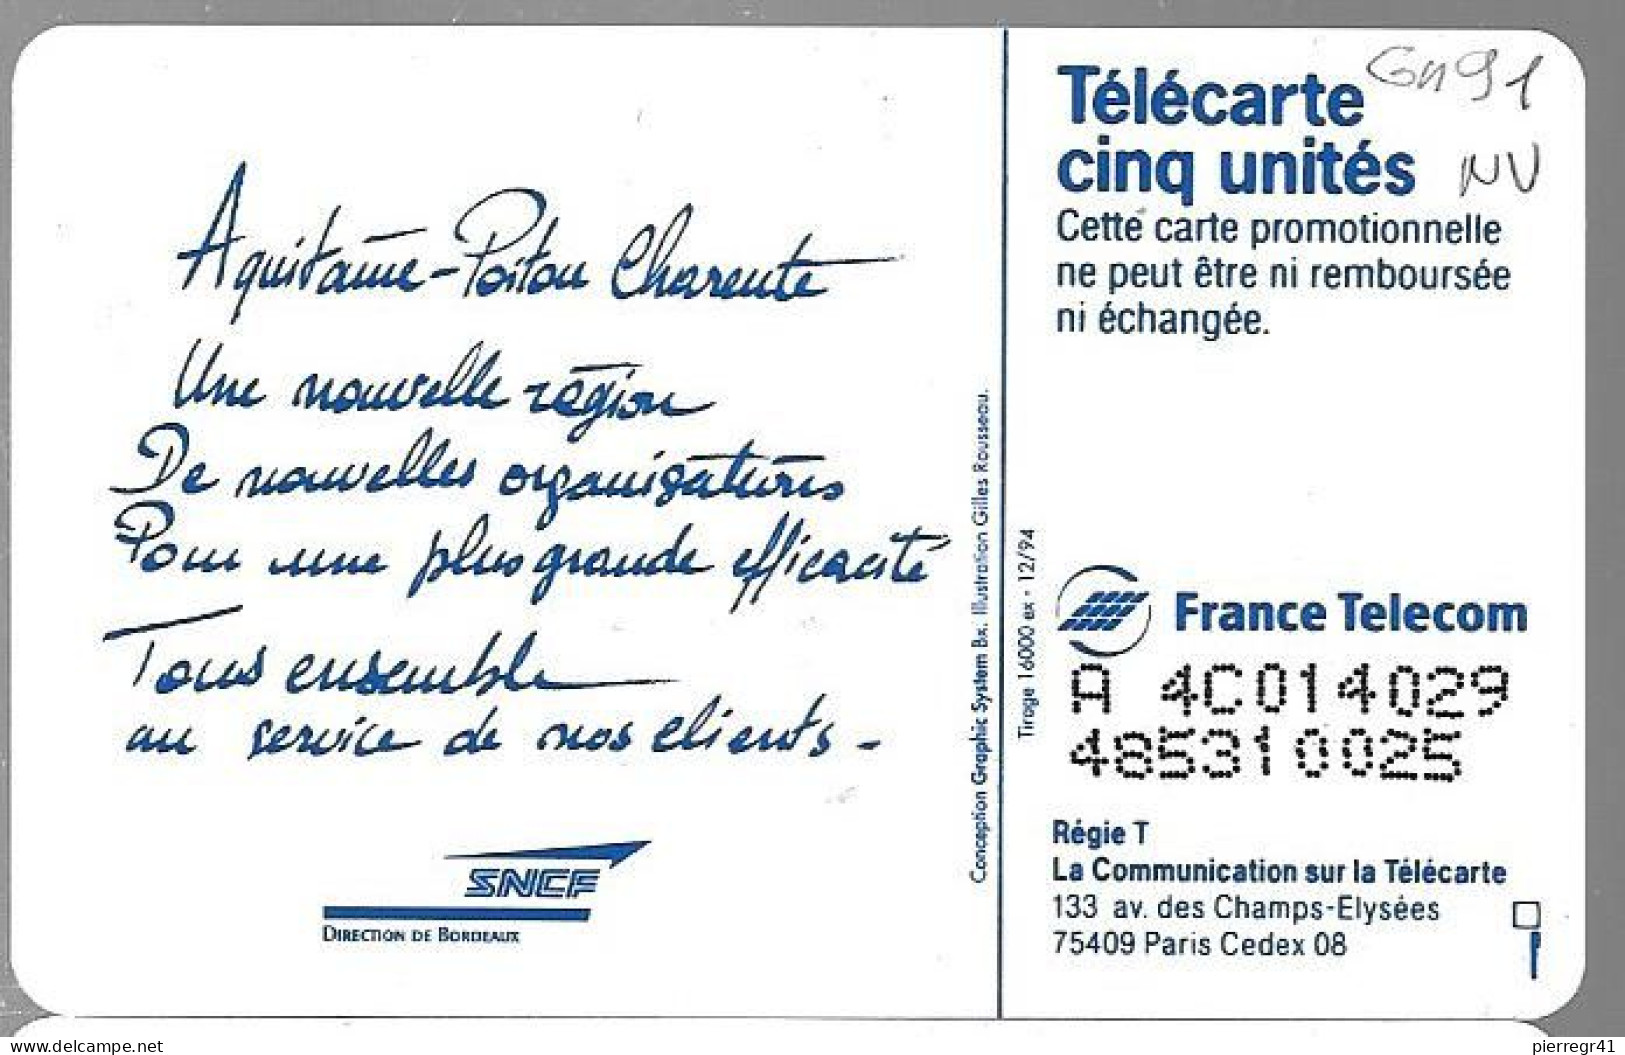 CARTE-PRIVEE-5U-GN 91-SO5-12/94-SNCF DN-JG-Série A 4C014029/-NEUVE-TBE - - 5 Eenheden